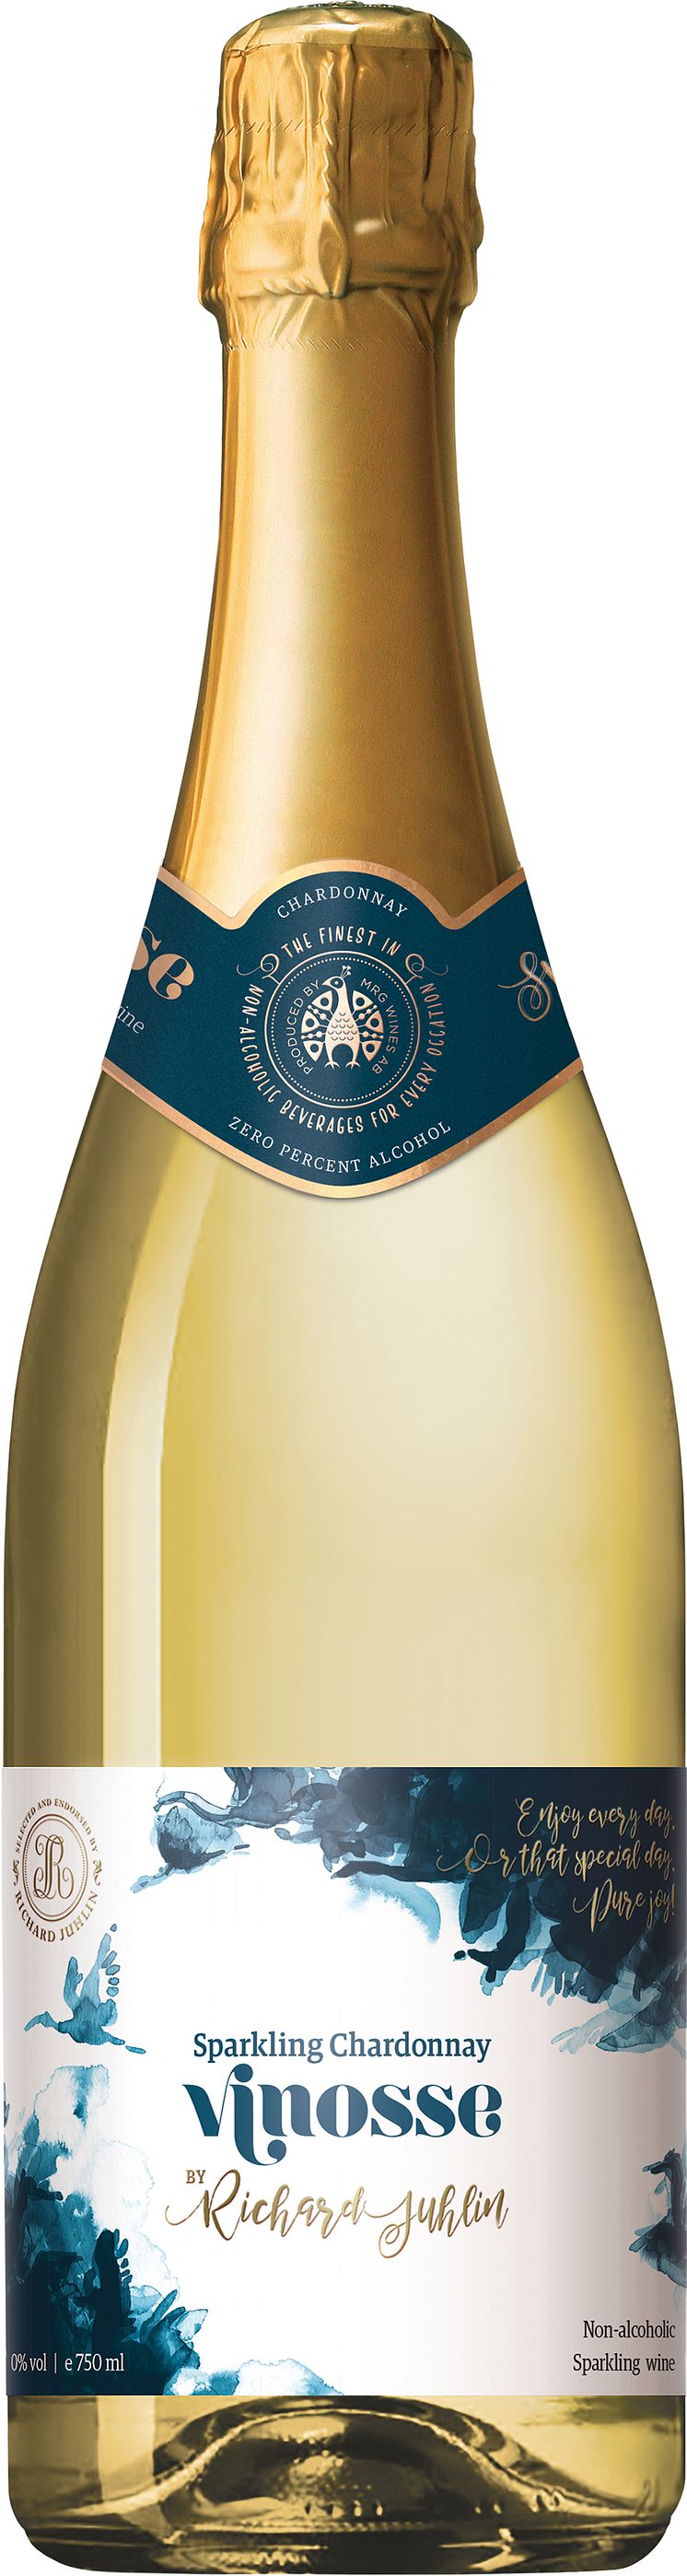 Vinosse Sparkling Chardonnay